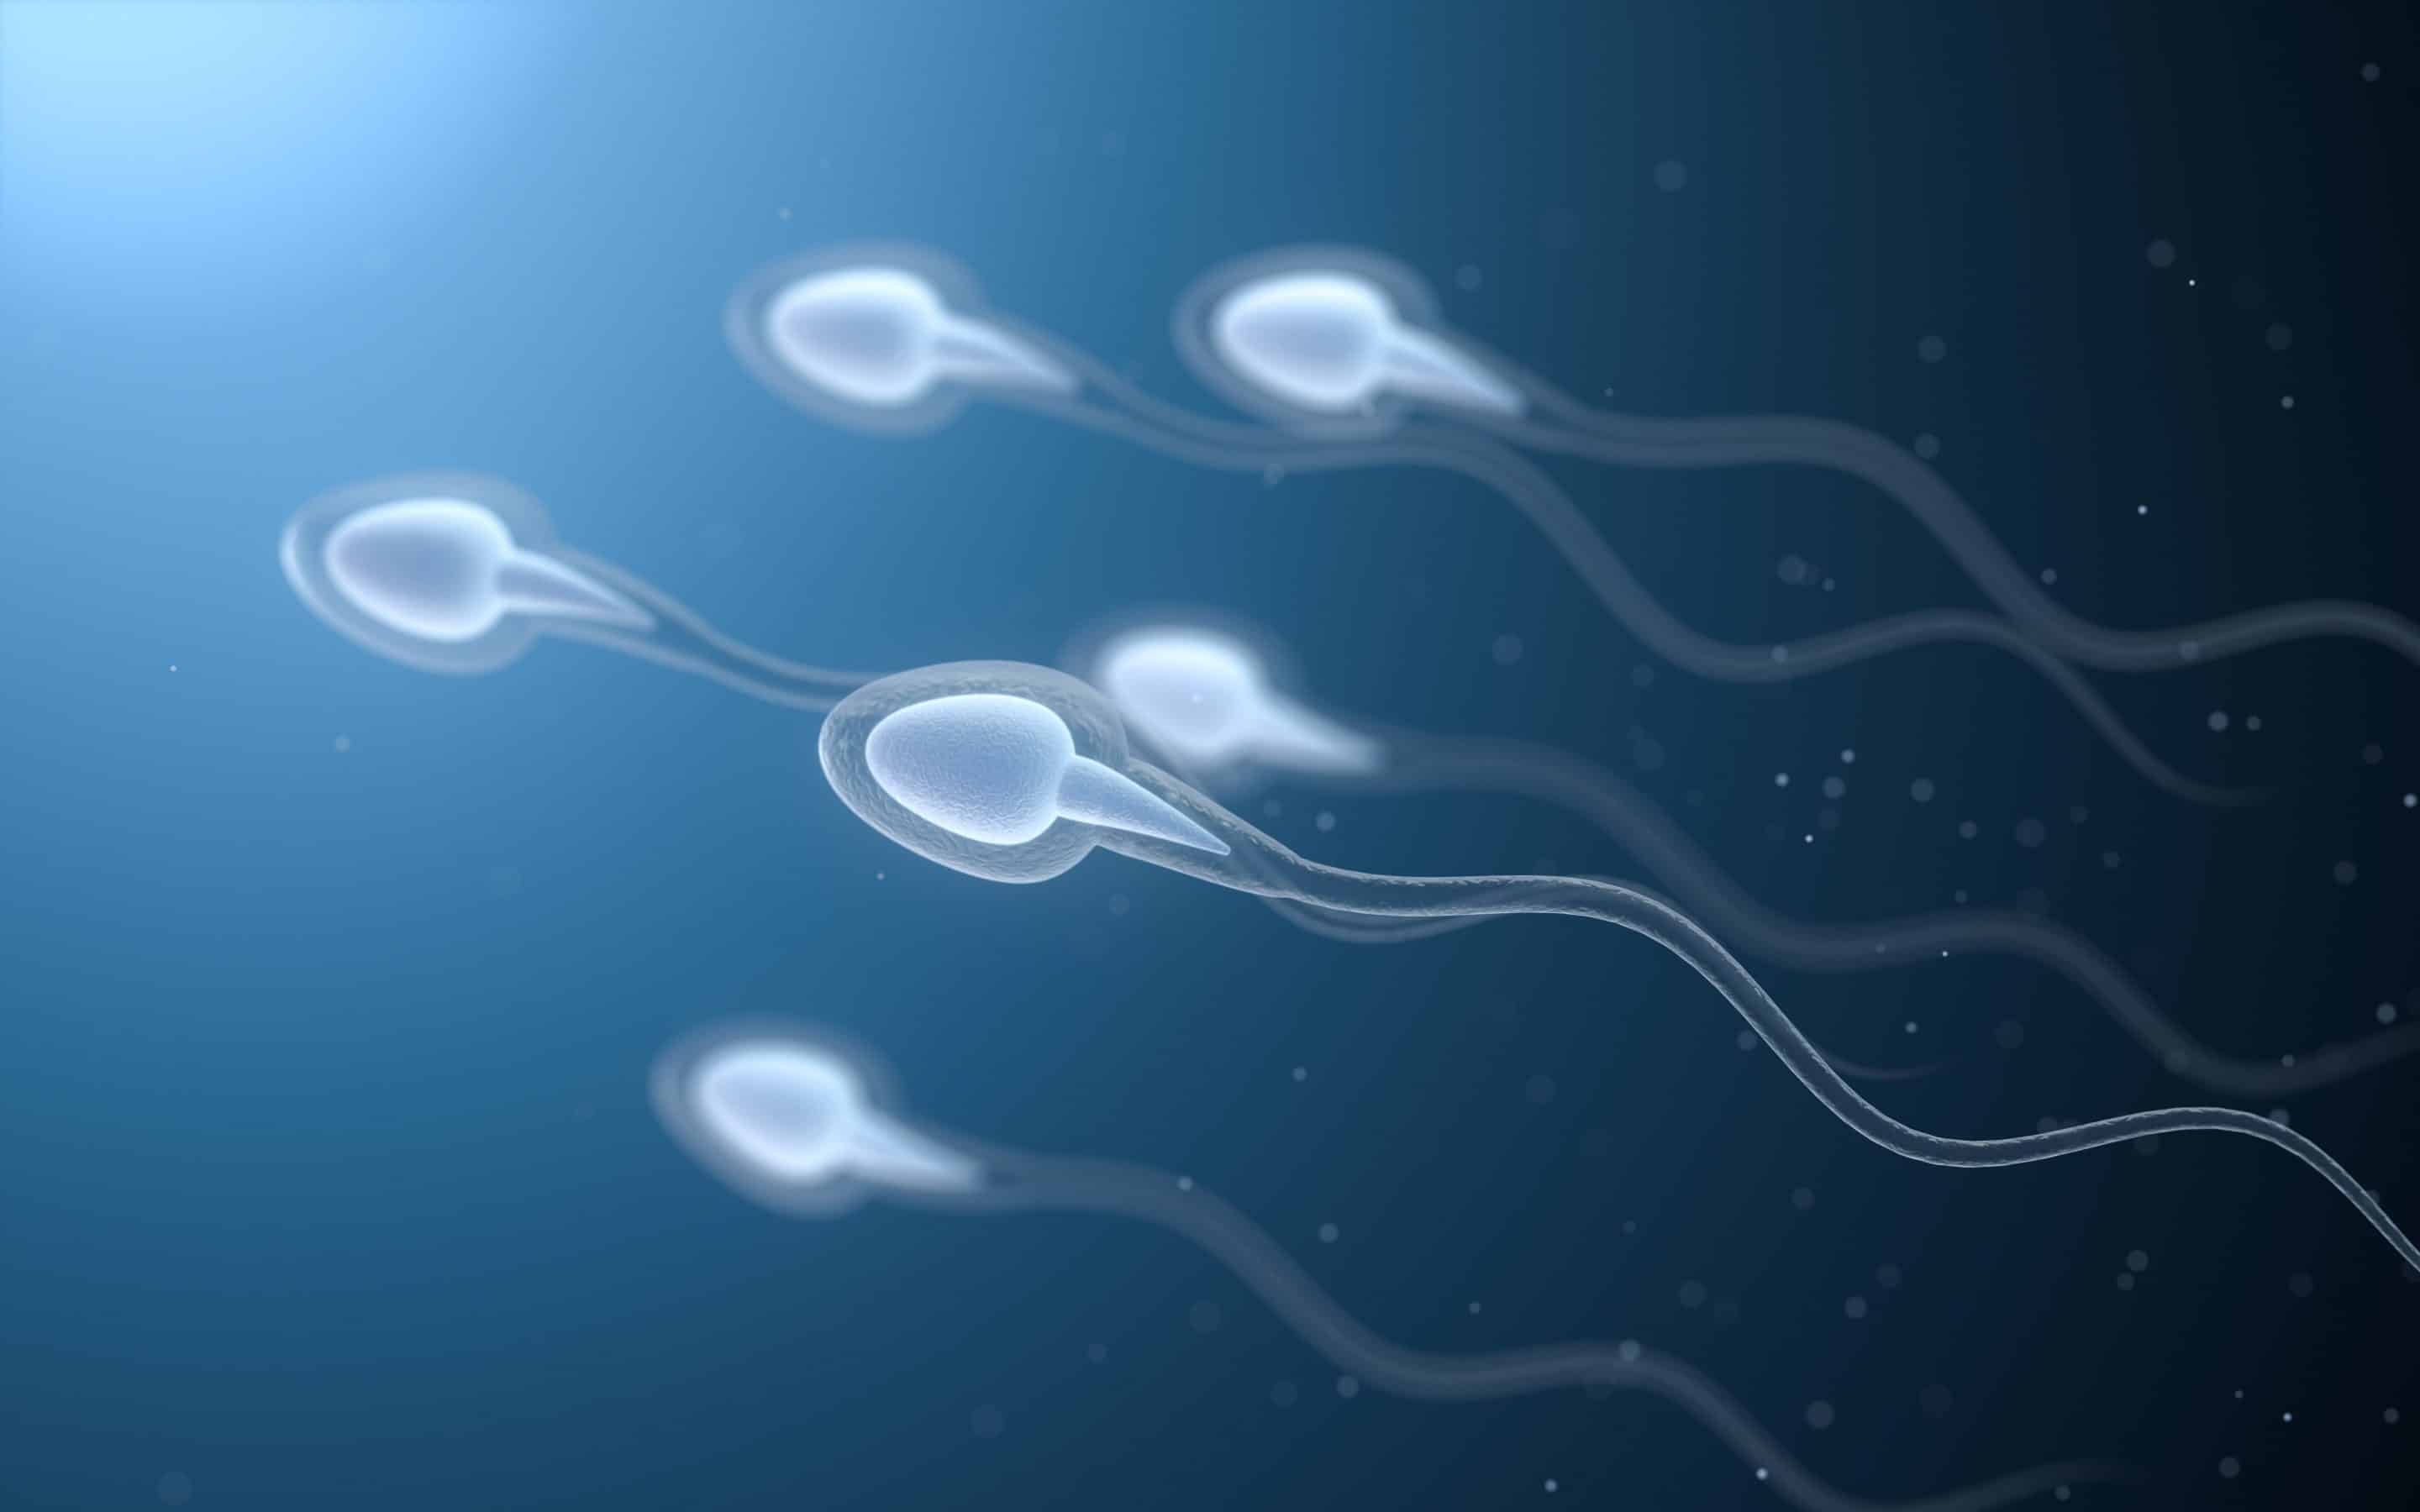 An image of sperm movement